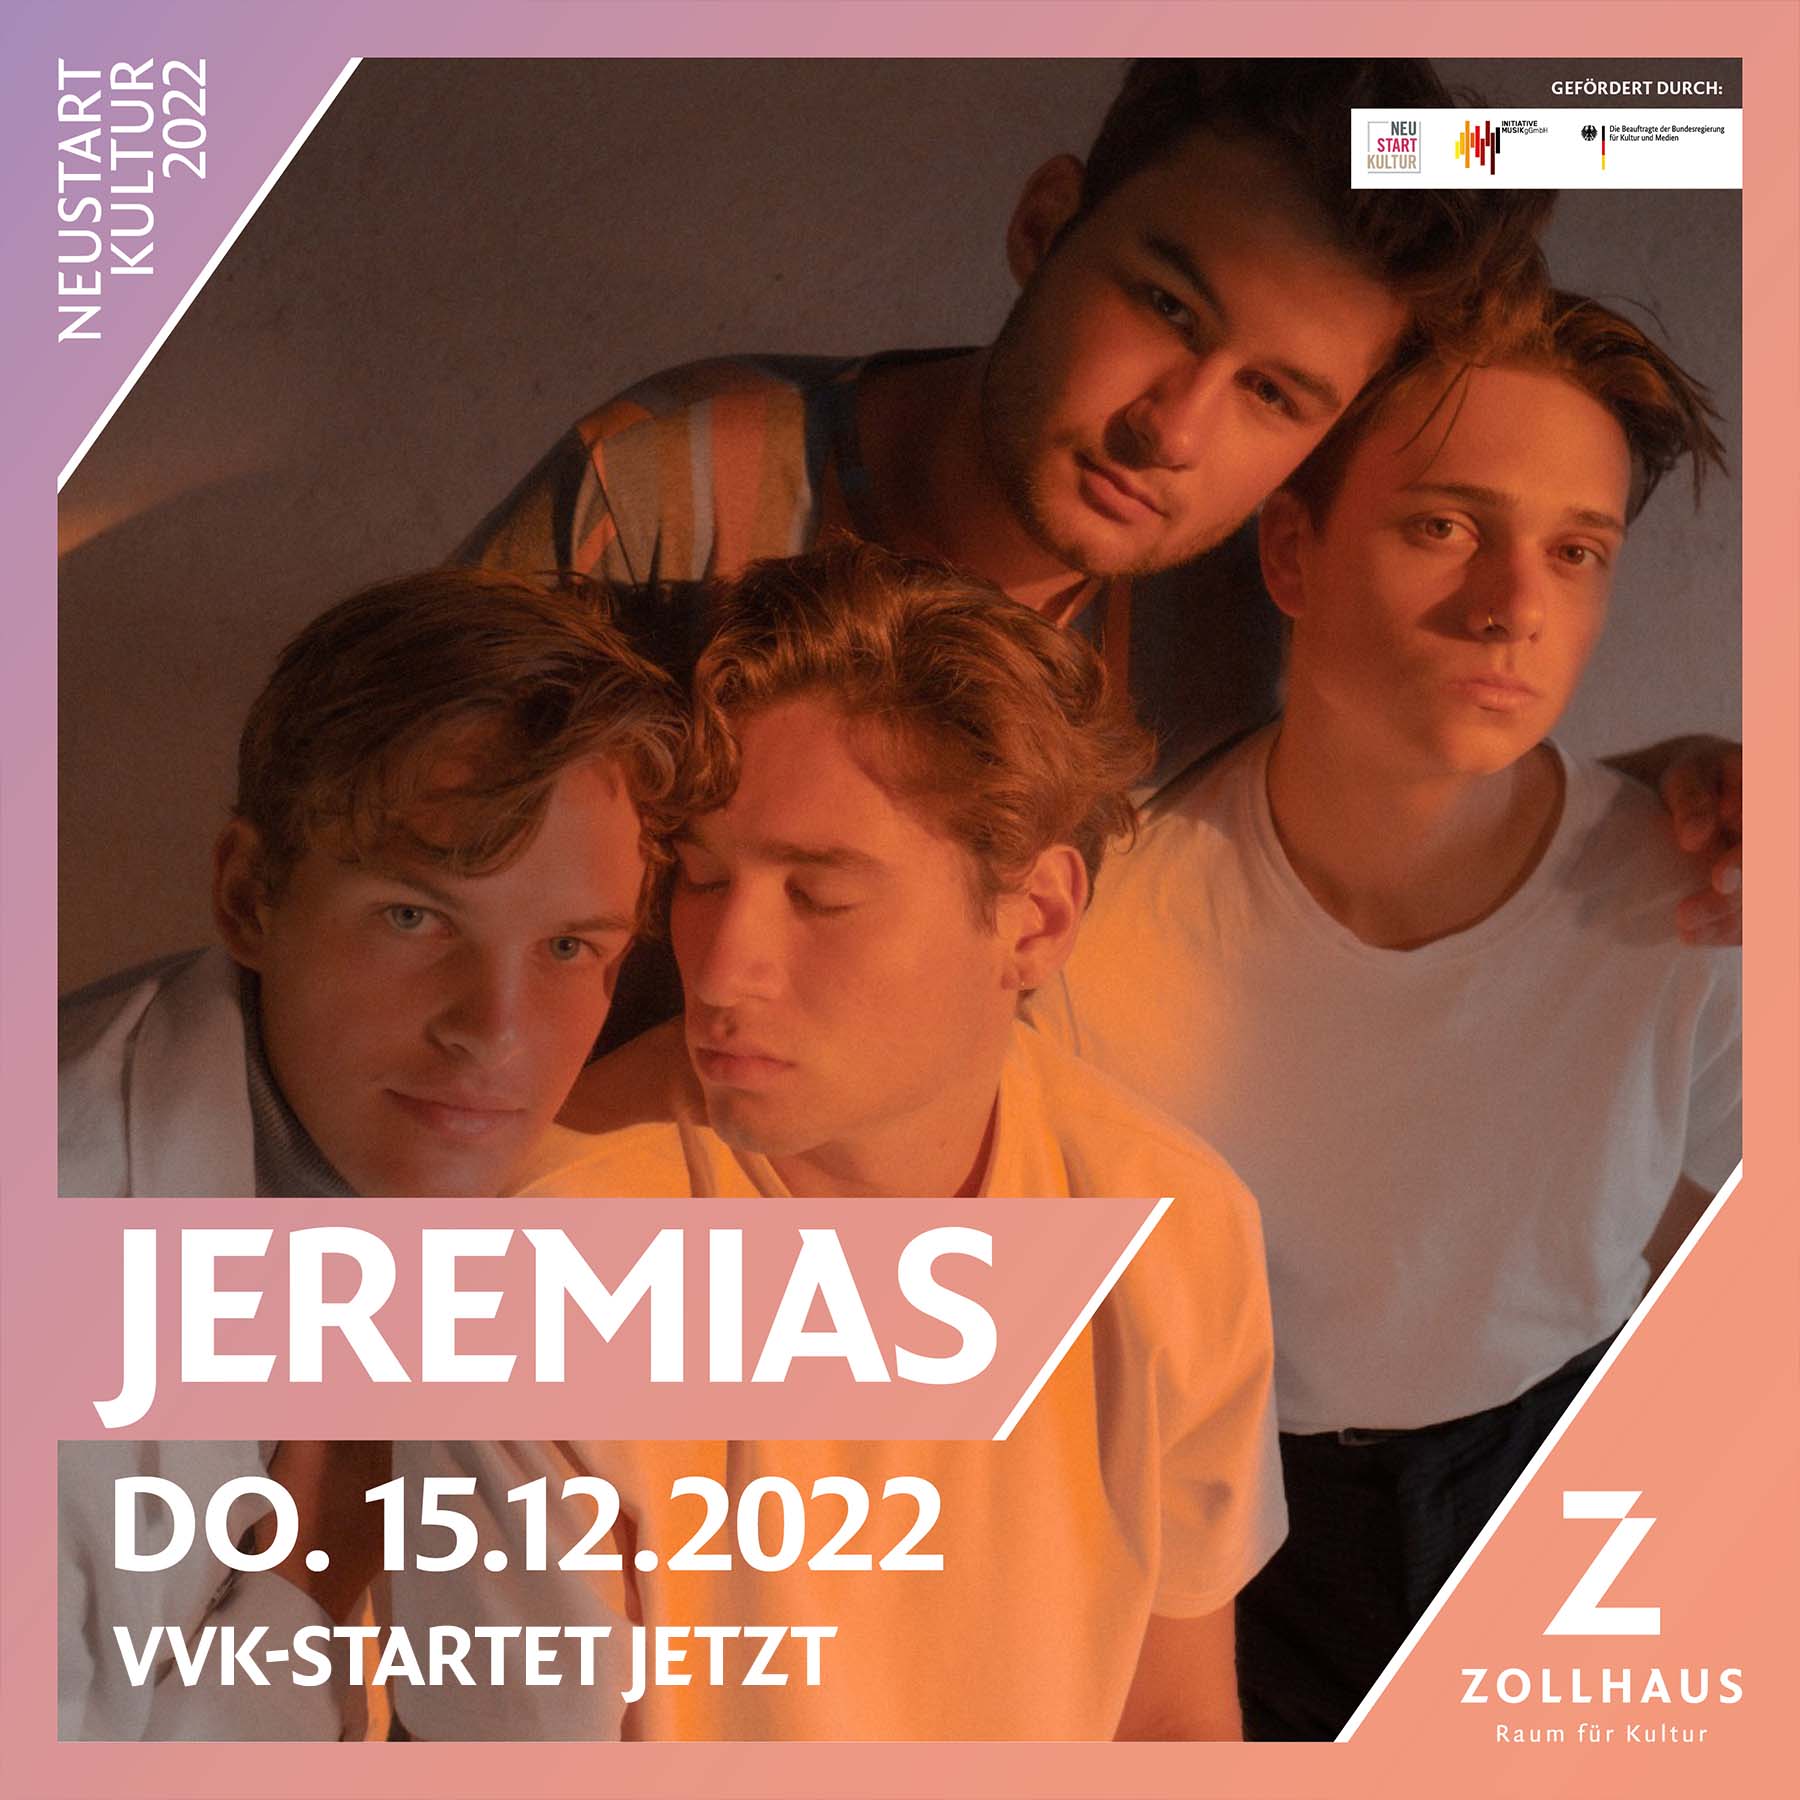 JEREMIAS (Neustart Kultur 2022) am 15.12.2022 im Zollhaus